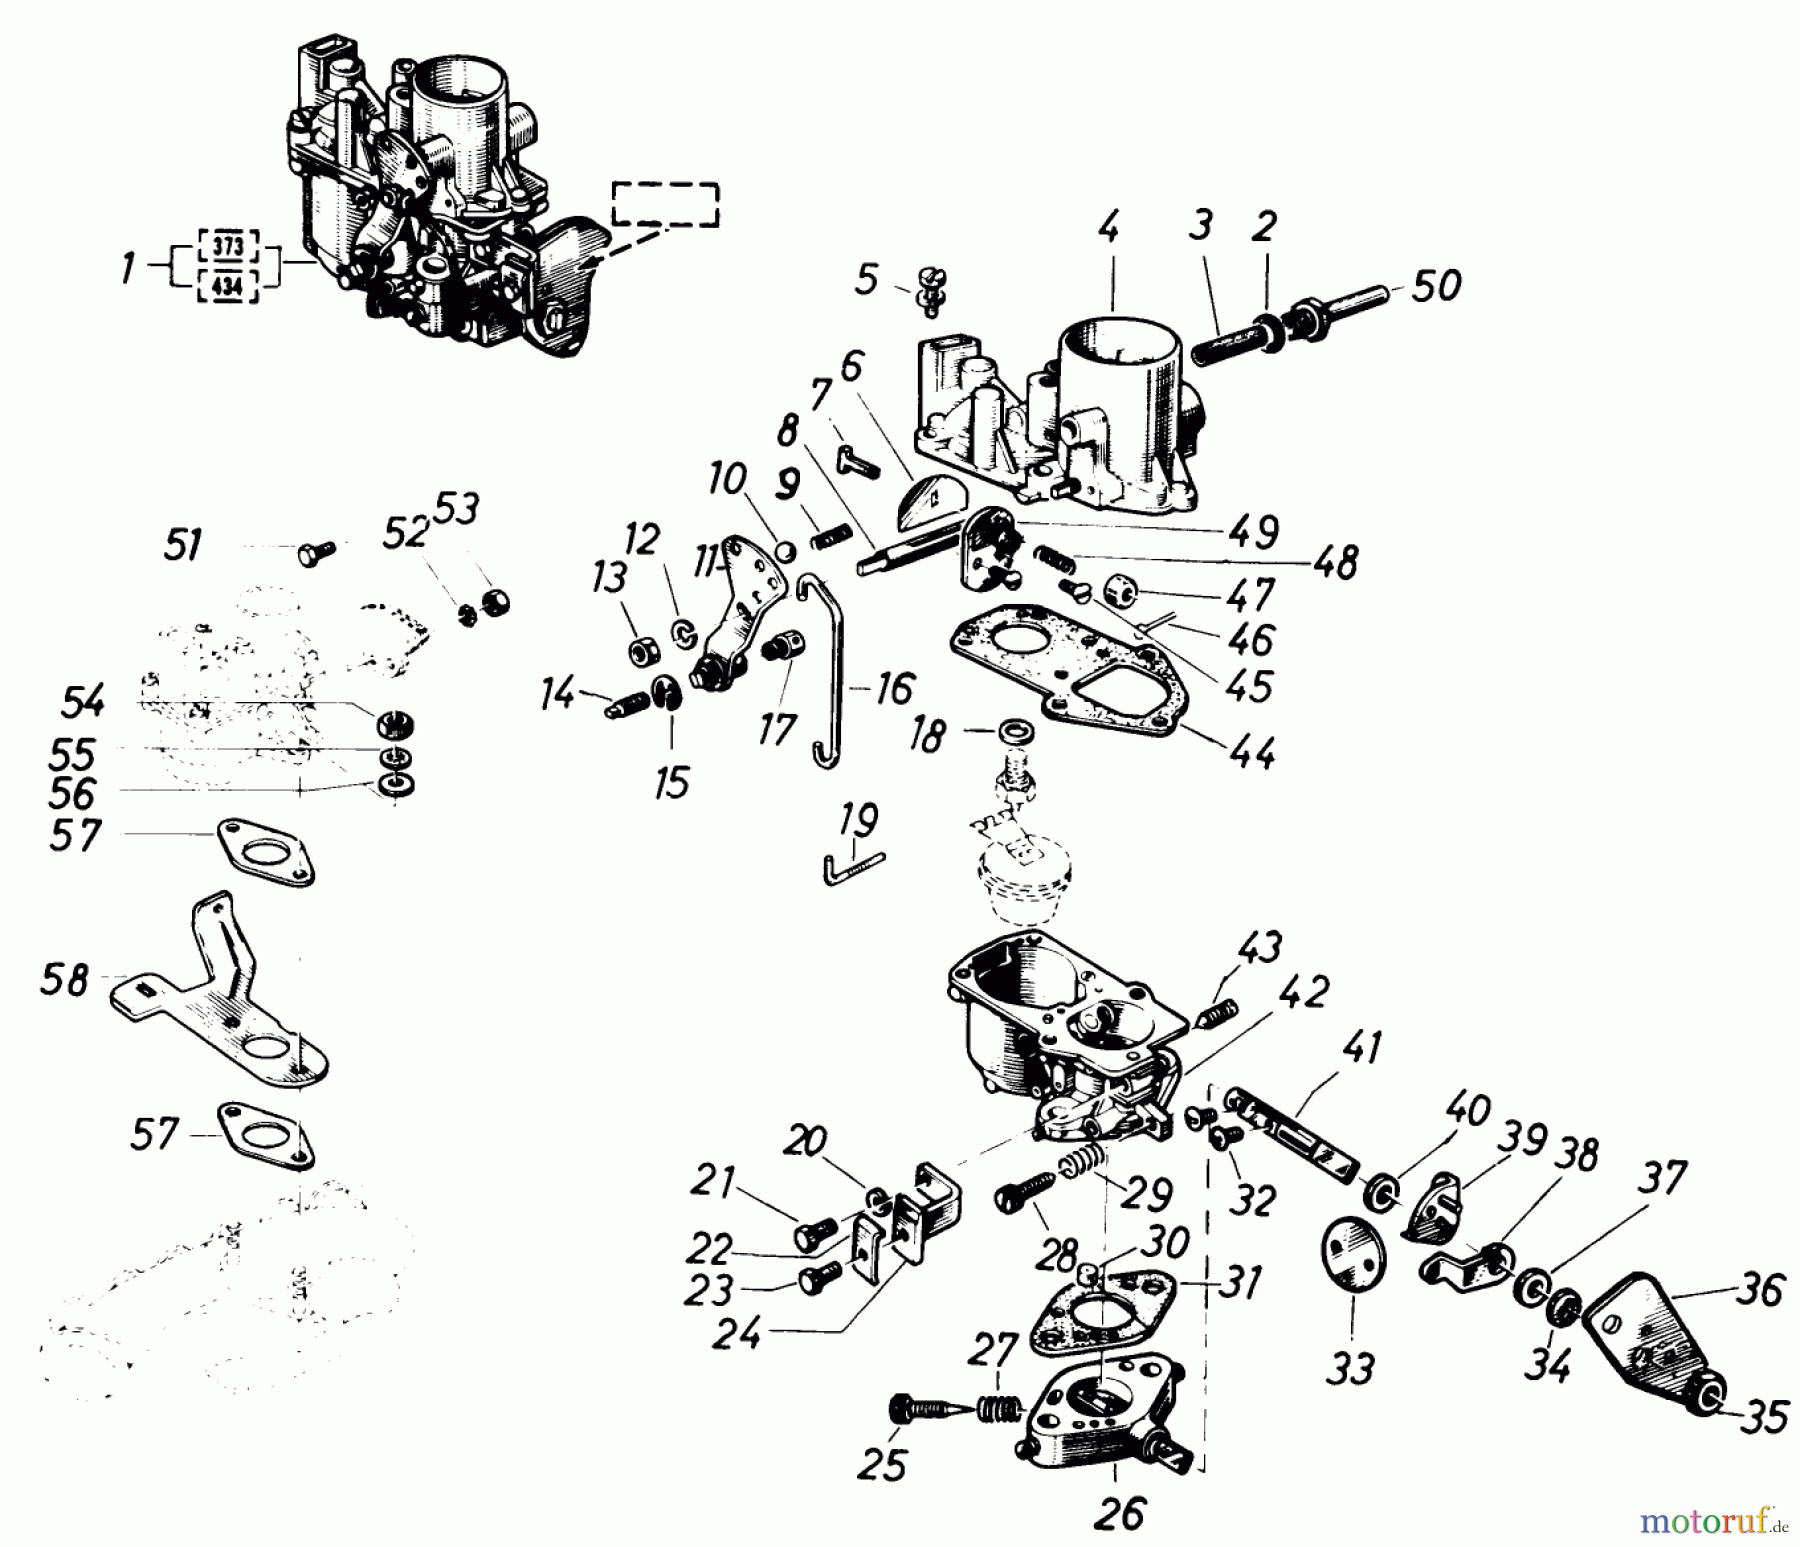  Toro Neu Mowers, Lawn & Garden Tractor Seite 1 61-20RG01 (D-250) - Toro D-250 10-Speed Tractor, 1976 CARBURETOR-